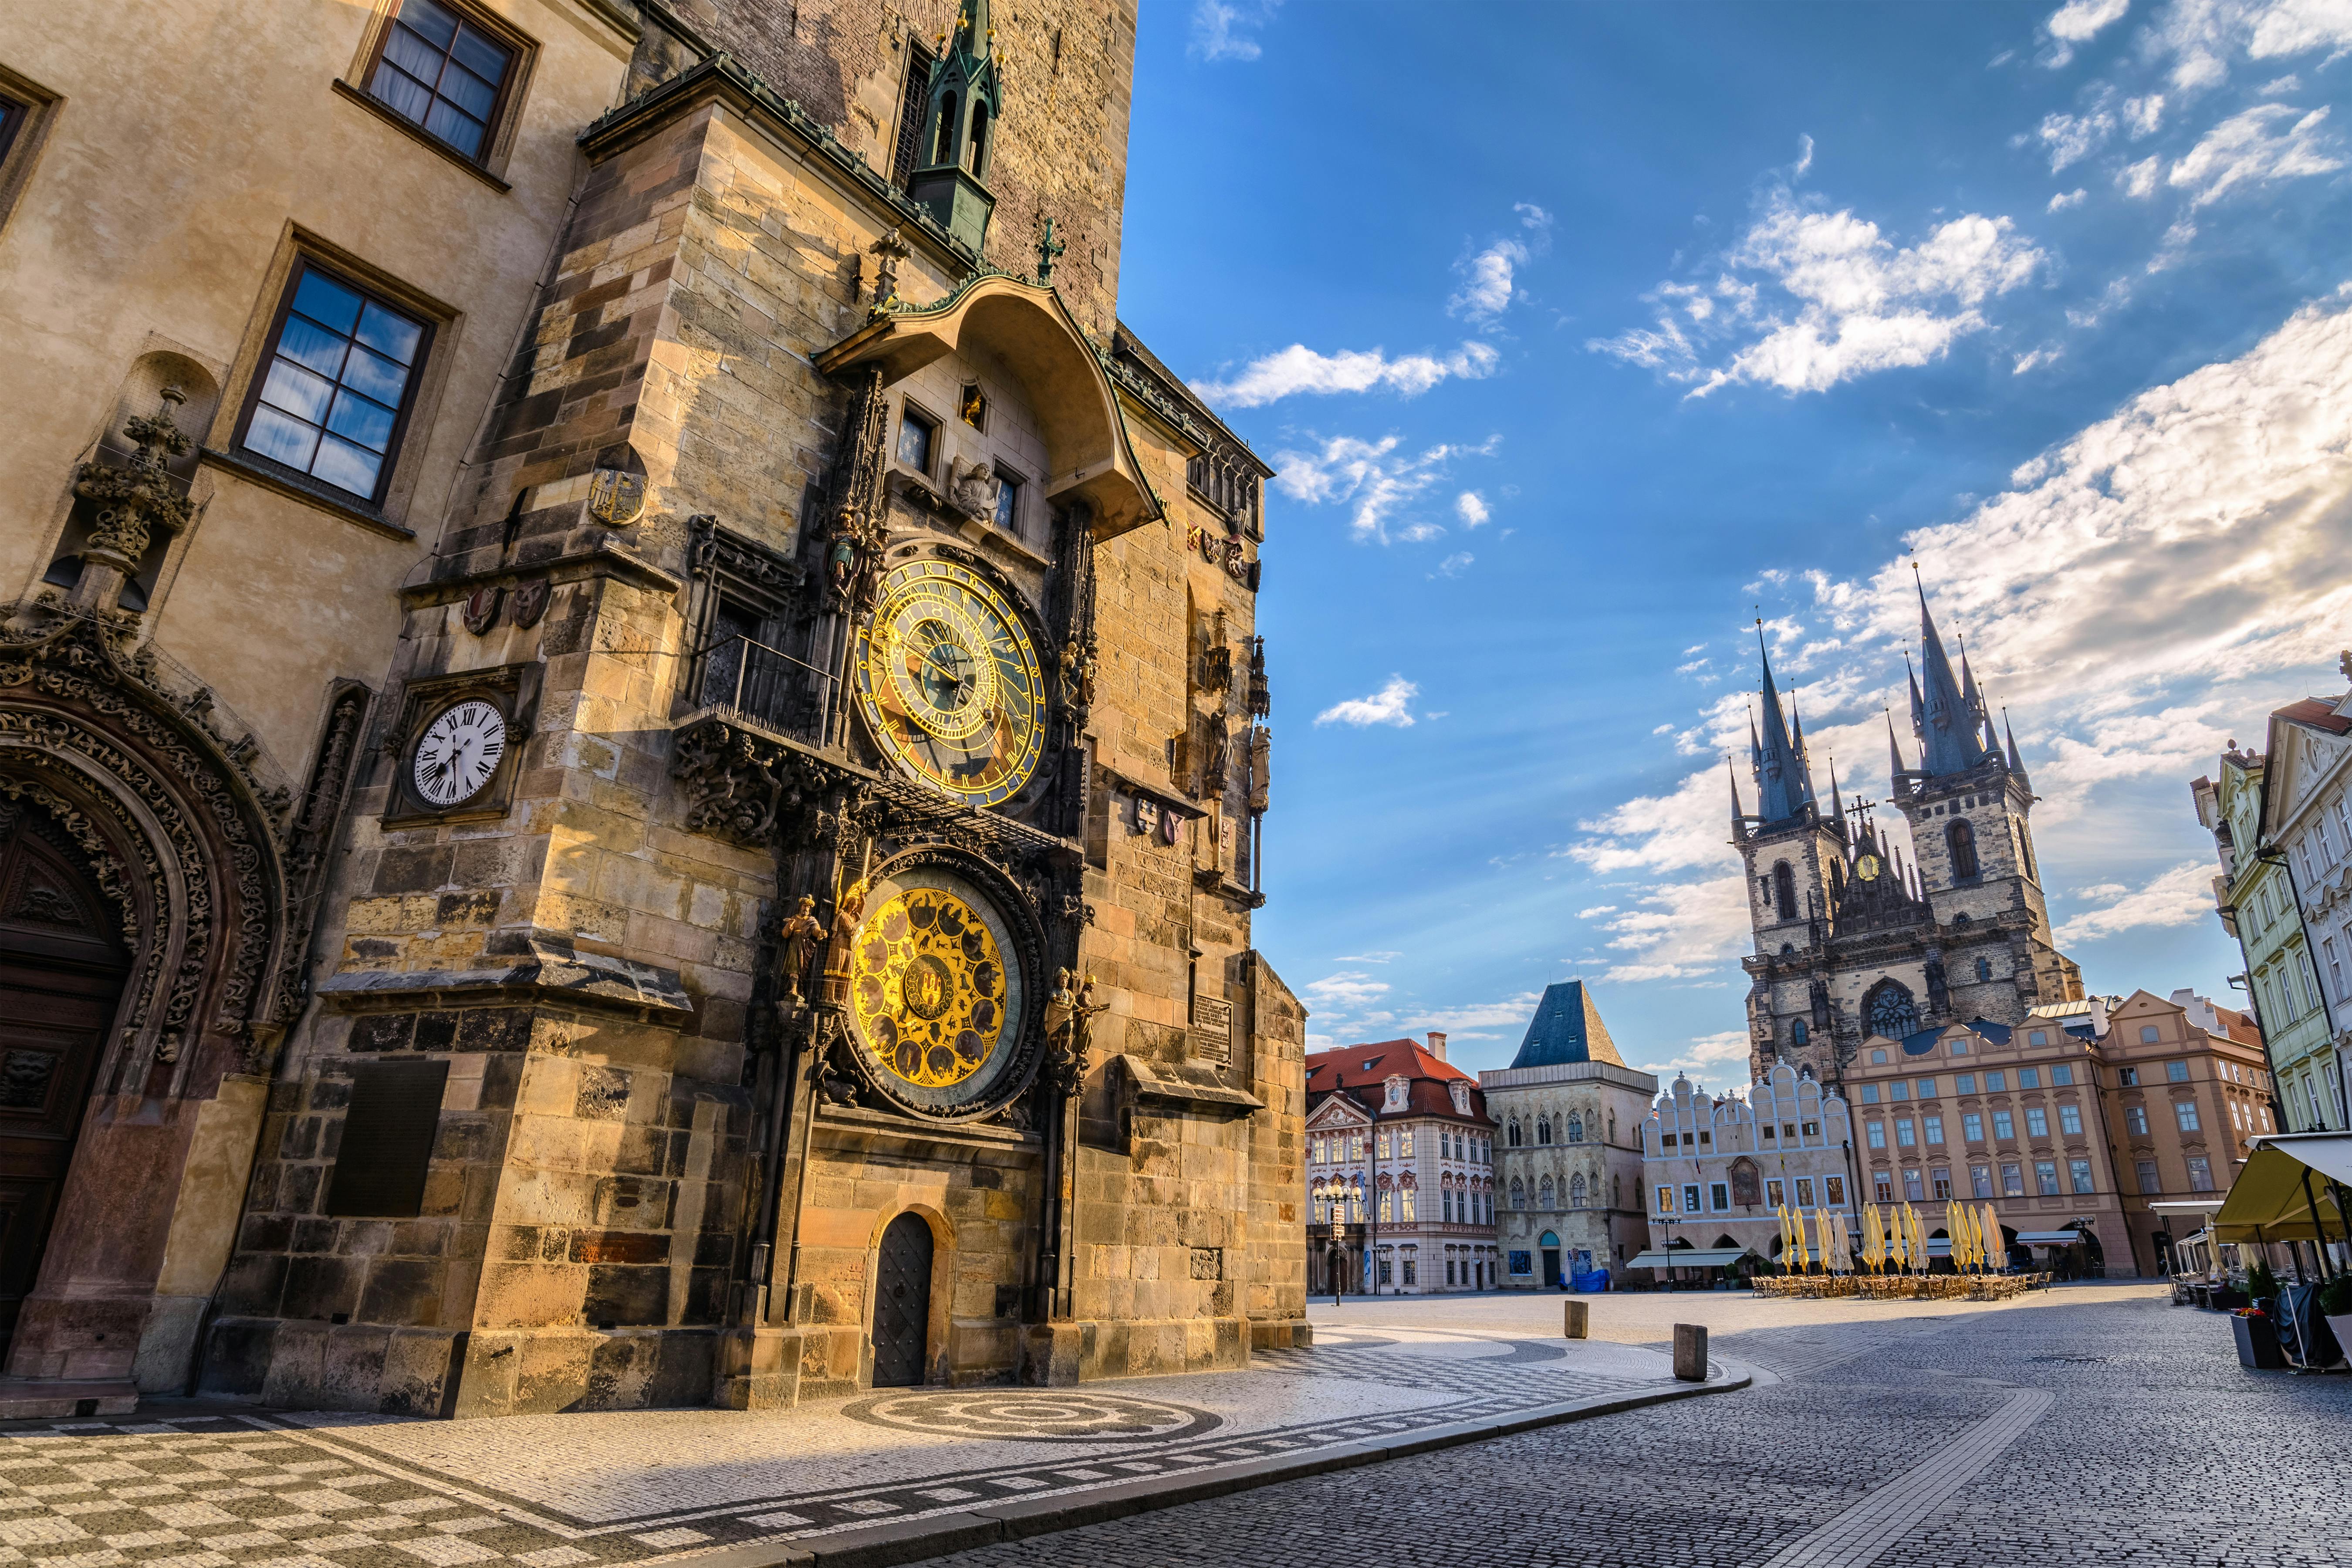 Prague Astronomical Clock Tower skip the line tickets Musement